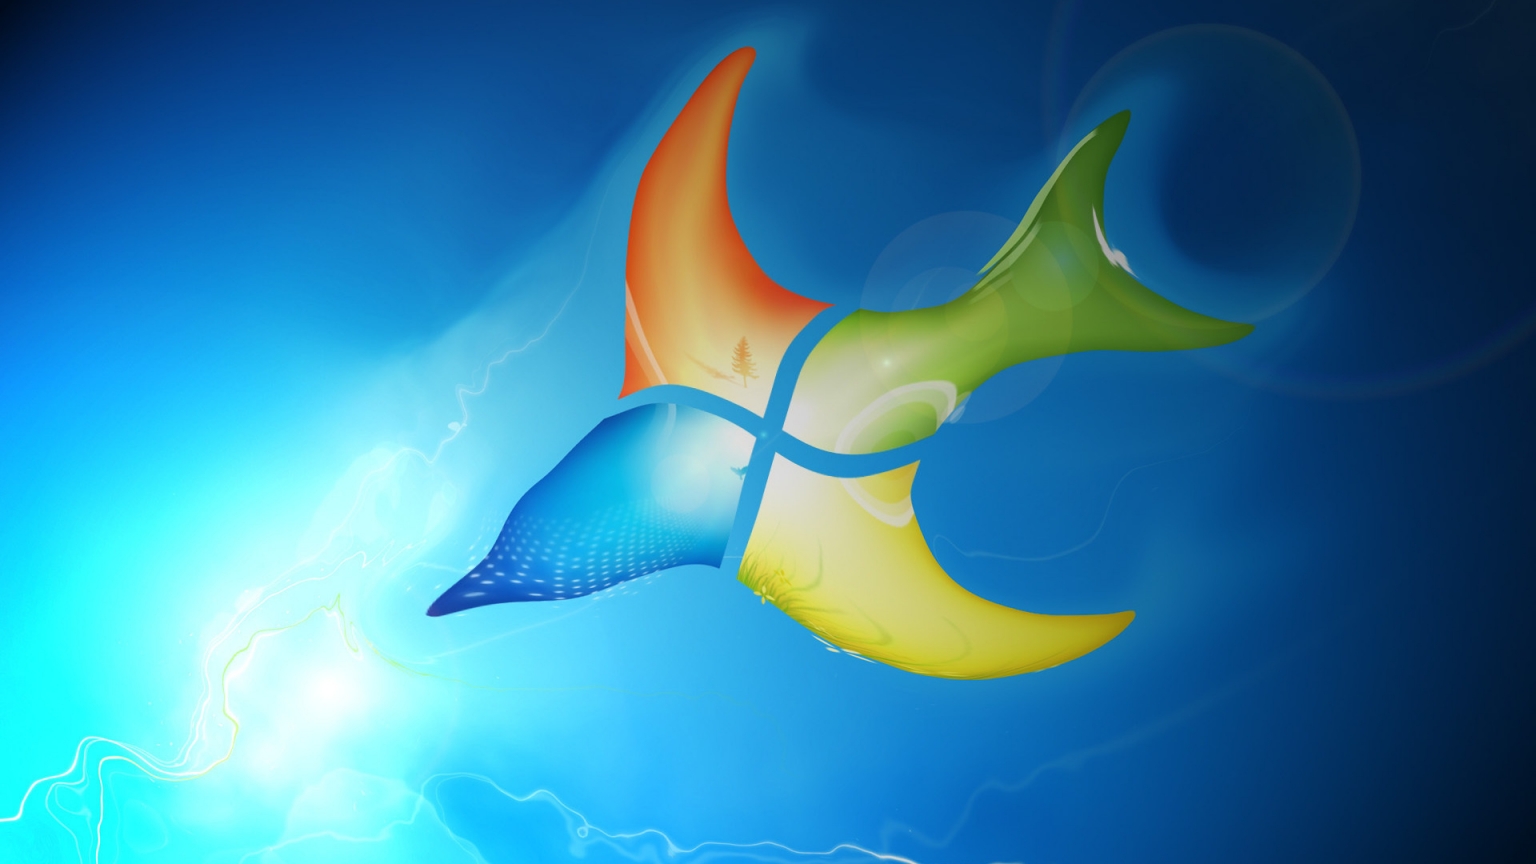 Windows Bird Logo for 1536 x 864 HDTV resolution